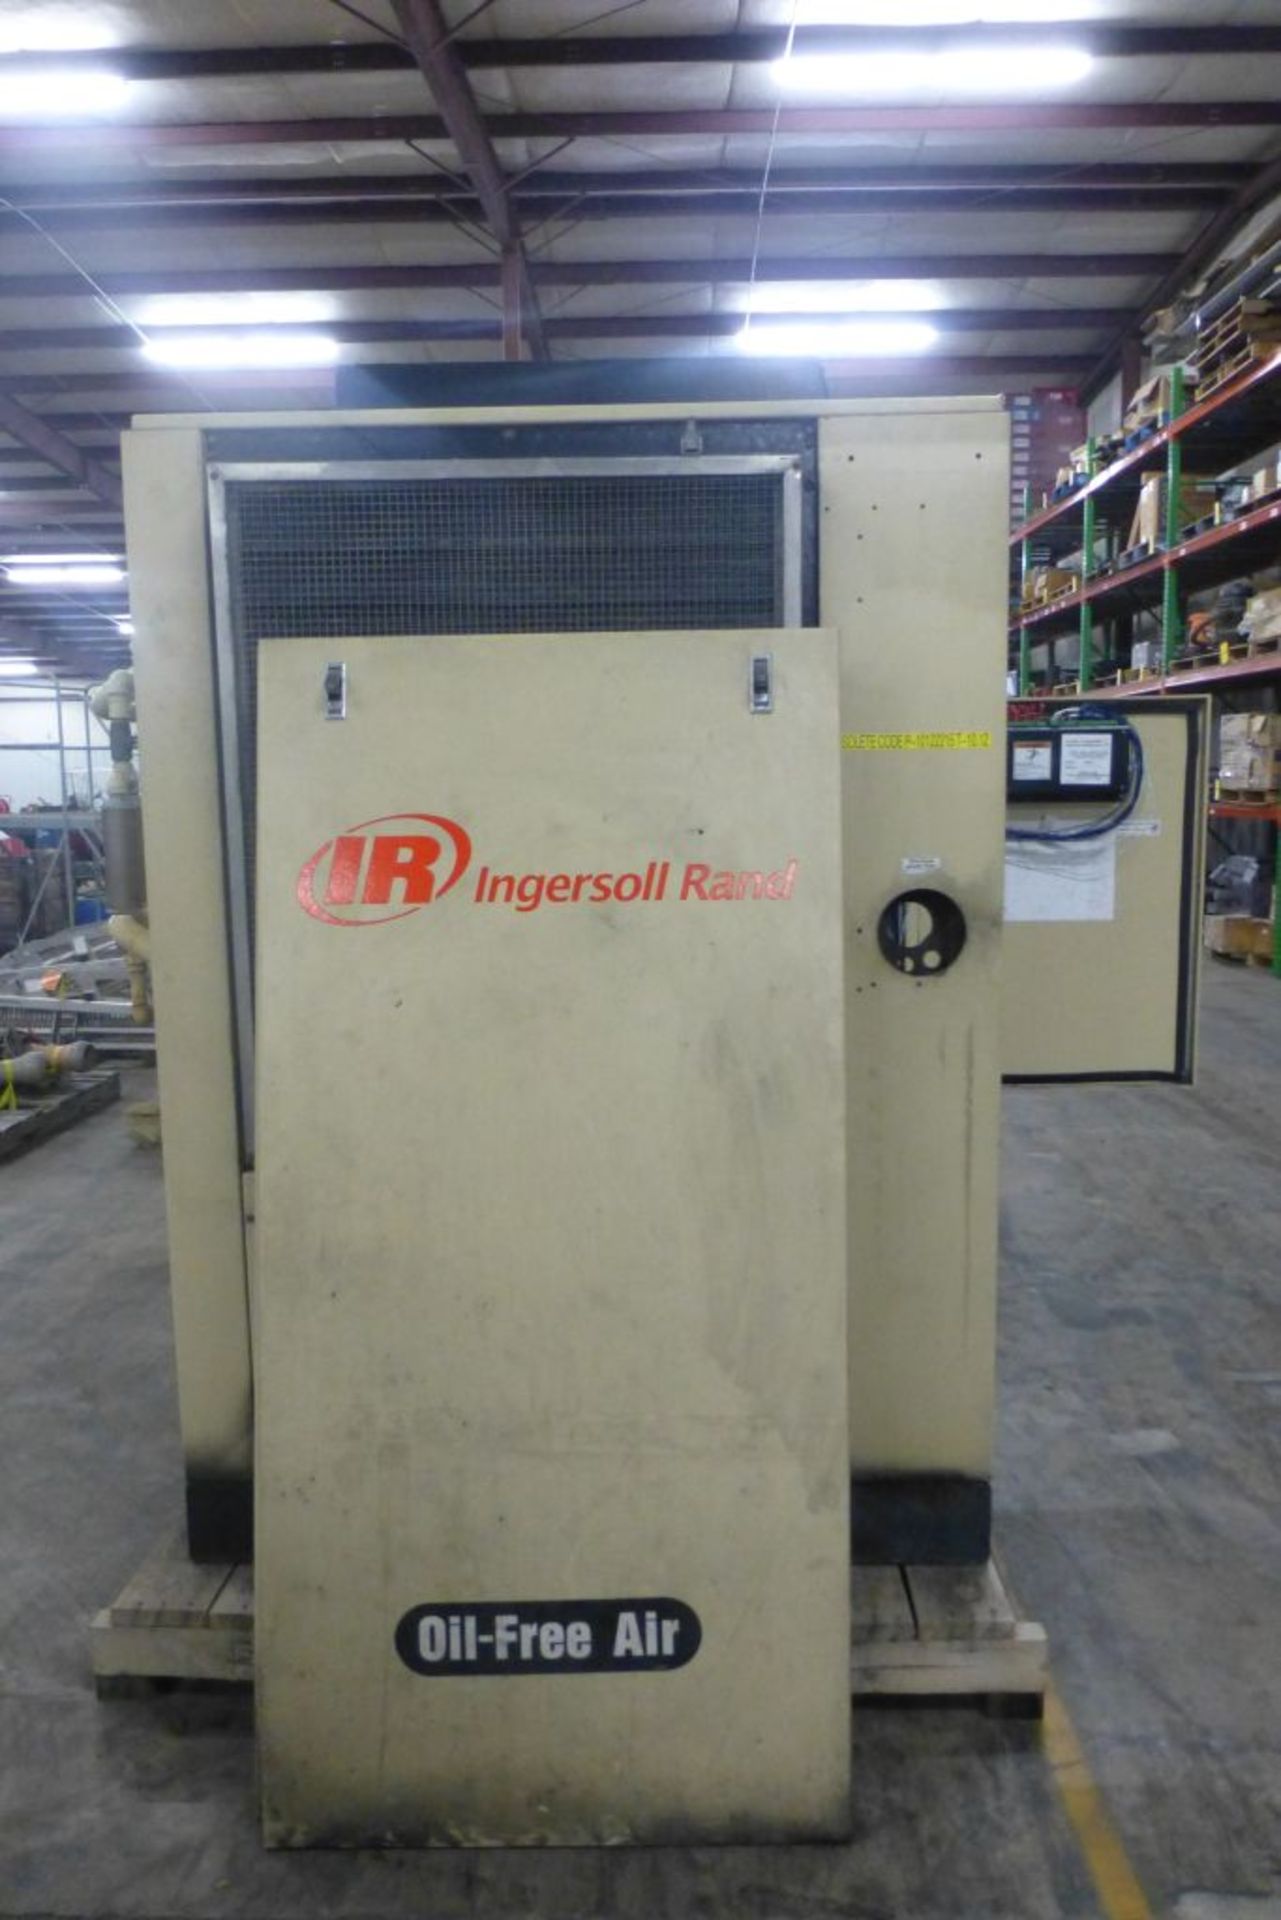 Ingersoll Rand Compressor | Part No. SIERRA-H60A; 75 HP; 460V; 125 PSI; 229 CFM Cap; 3PH - Image 6 of 22